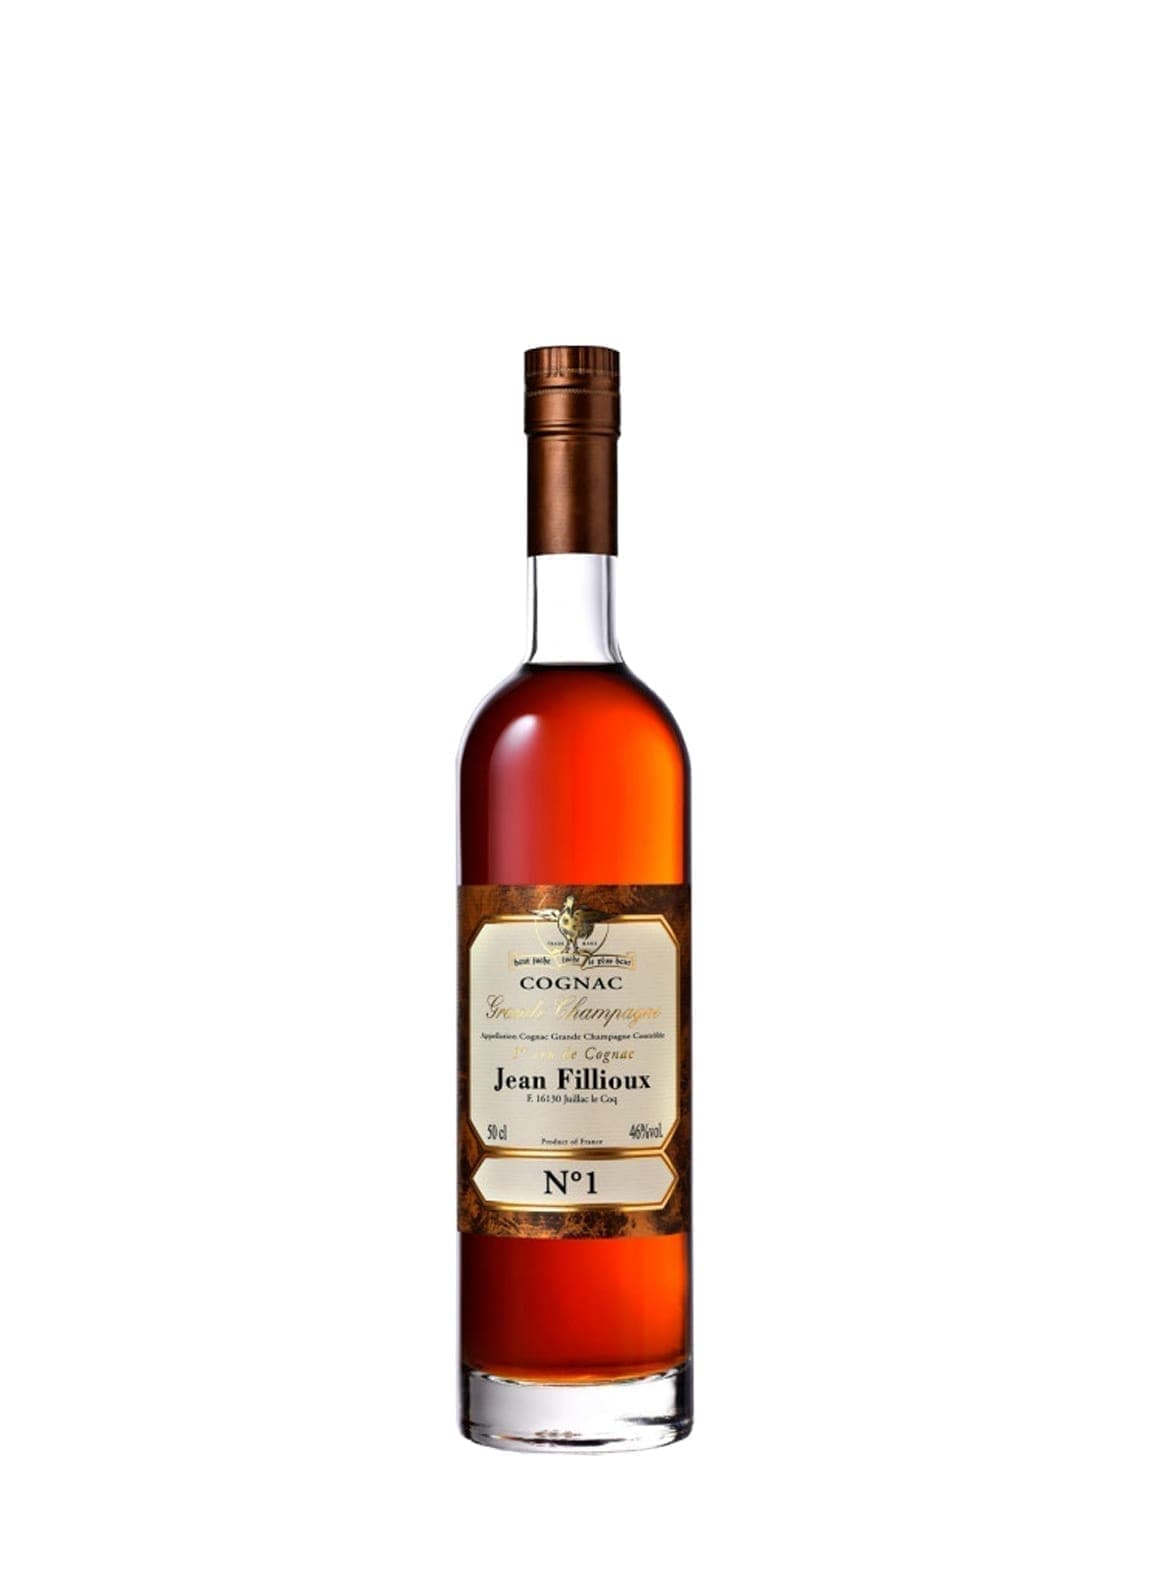 Jean Fillioux Cognac Numero 1 Grande Champagne 60 years 46% 500ml | Brandy | Shop online at Spirits of France